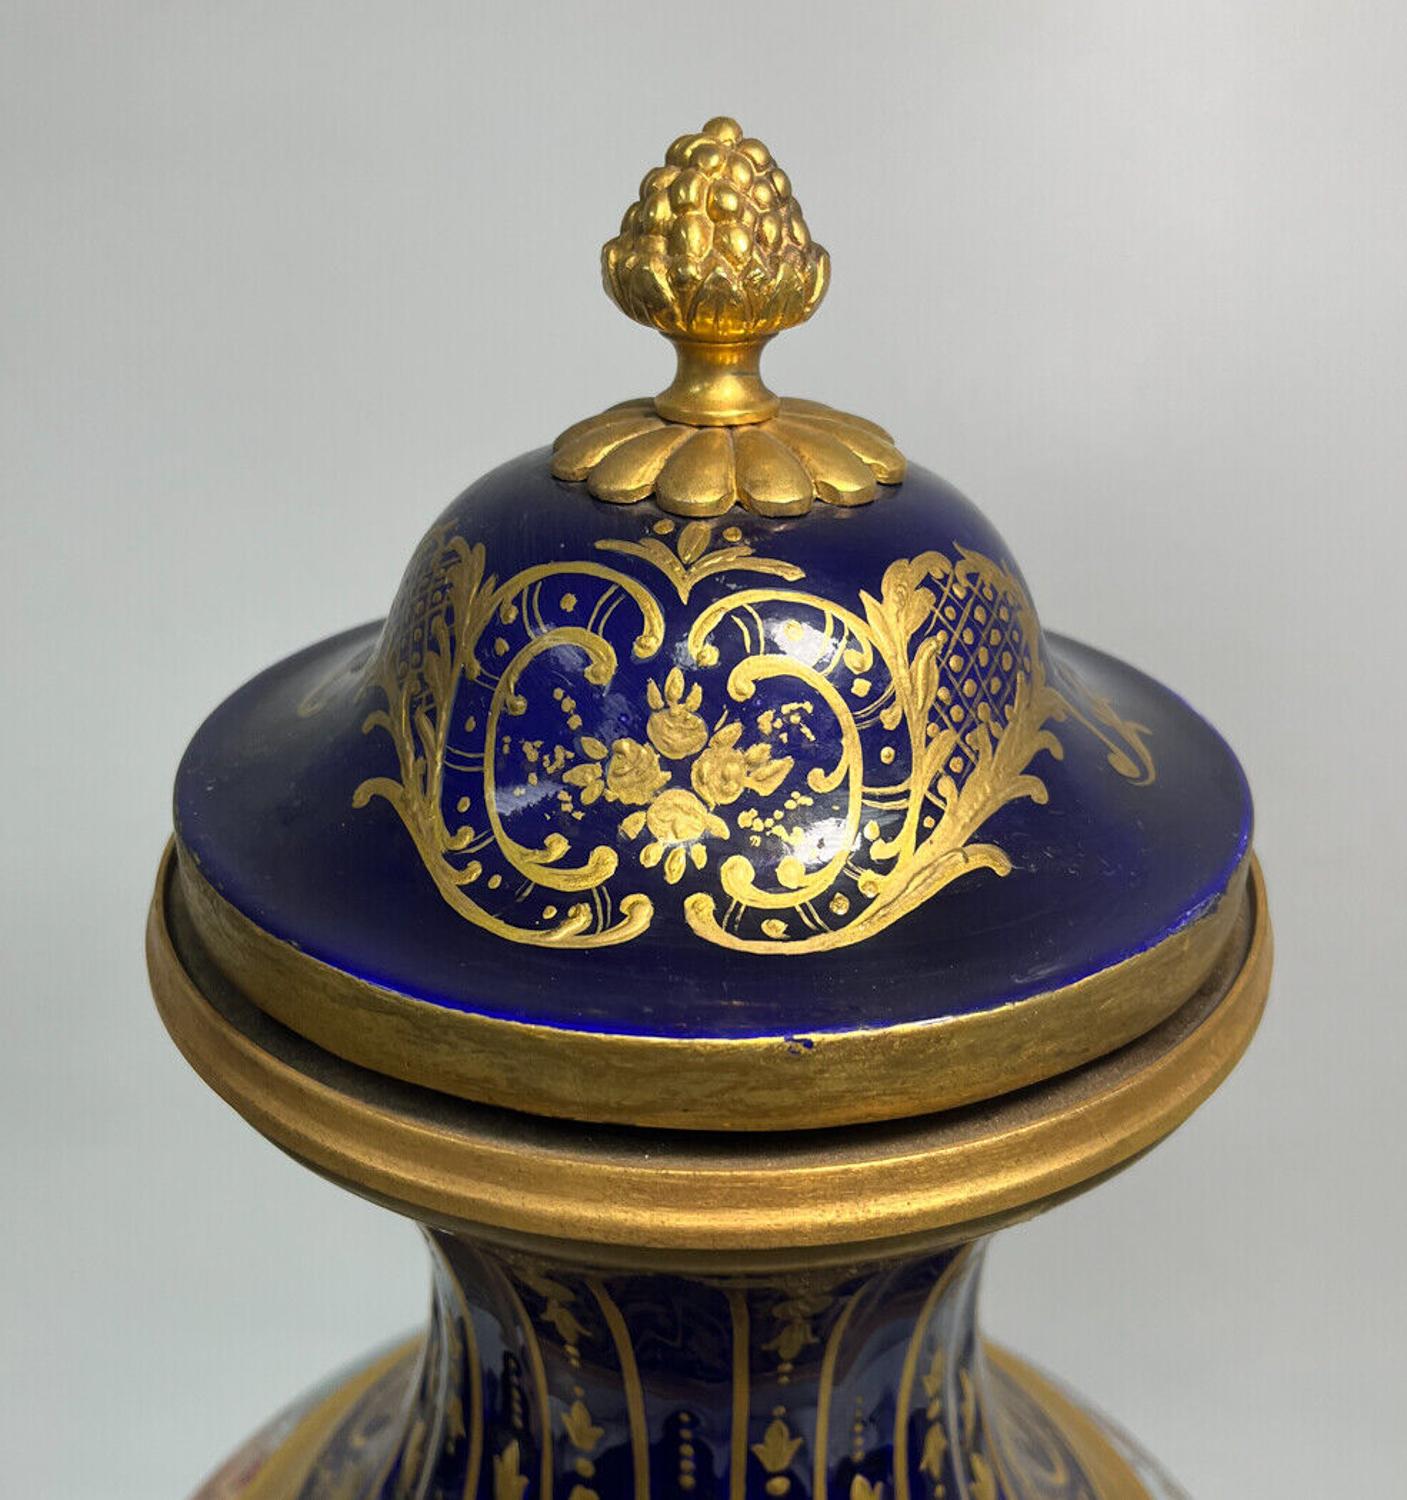  Sevres France Porcelain Large Decorative Urn, Late 19th Century  For Sale 4